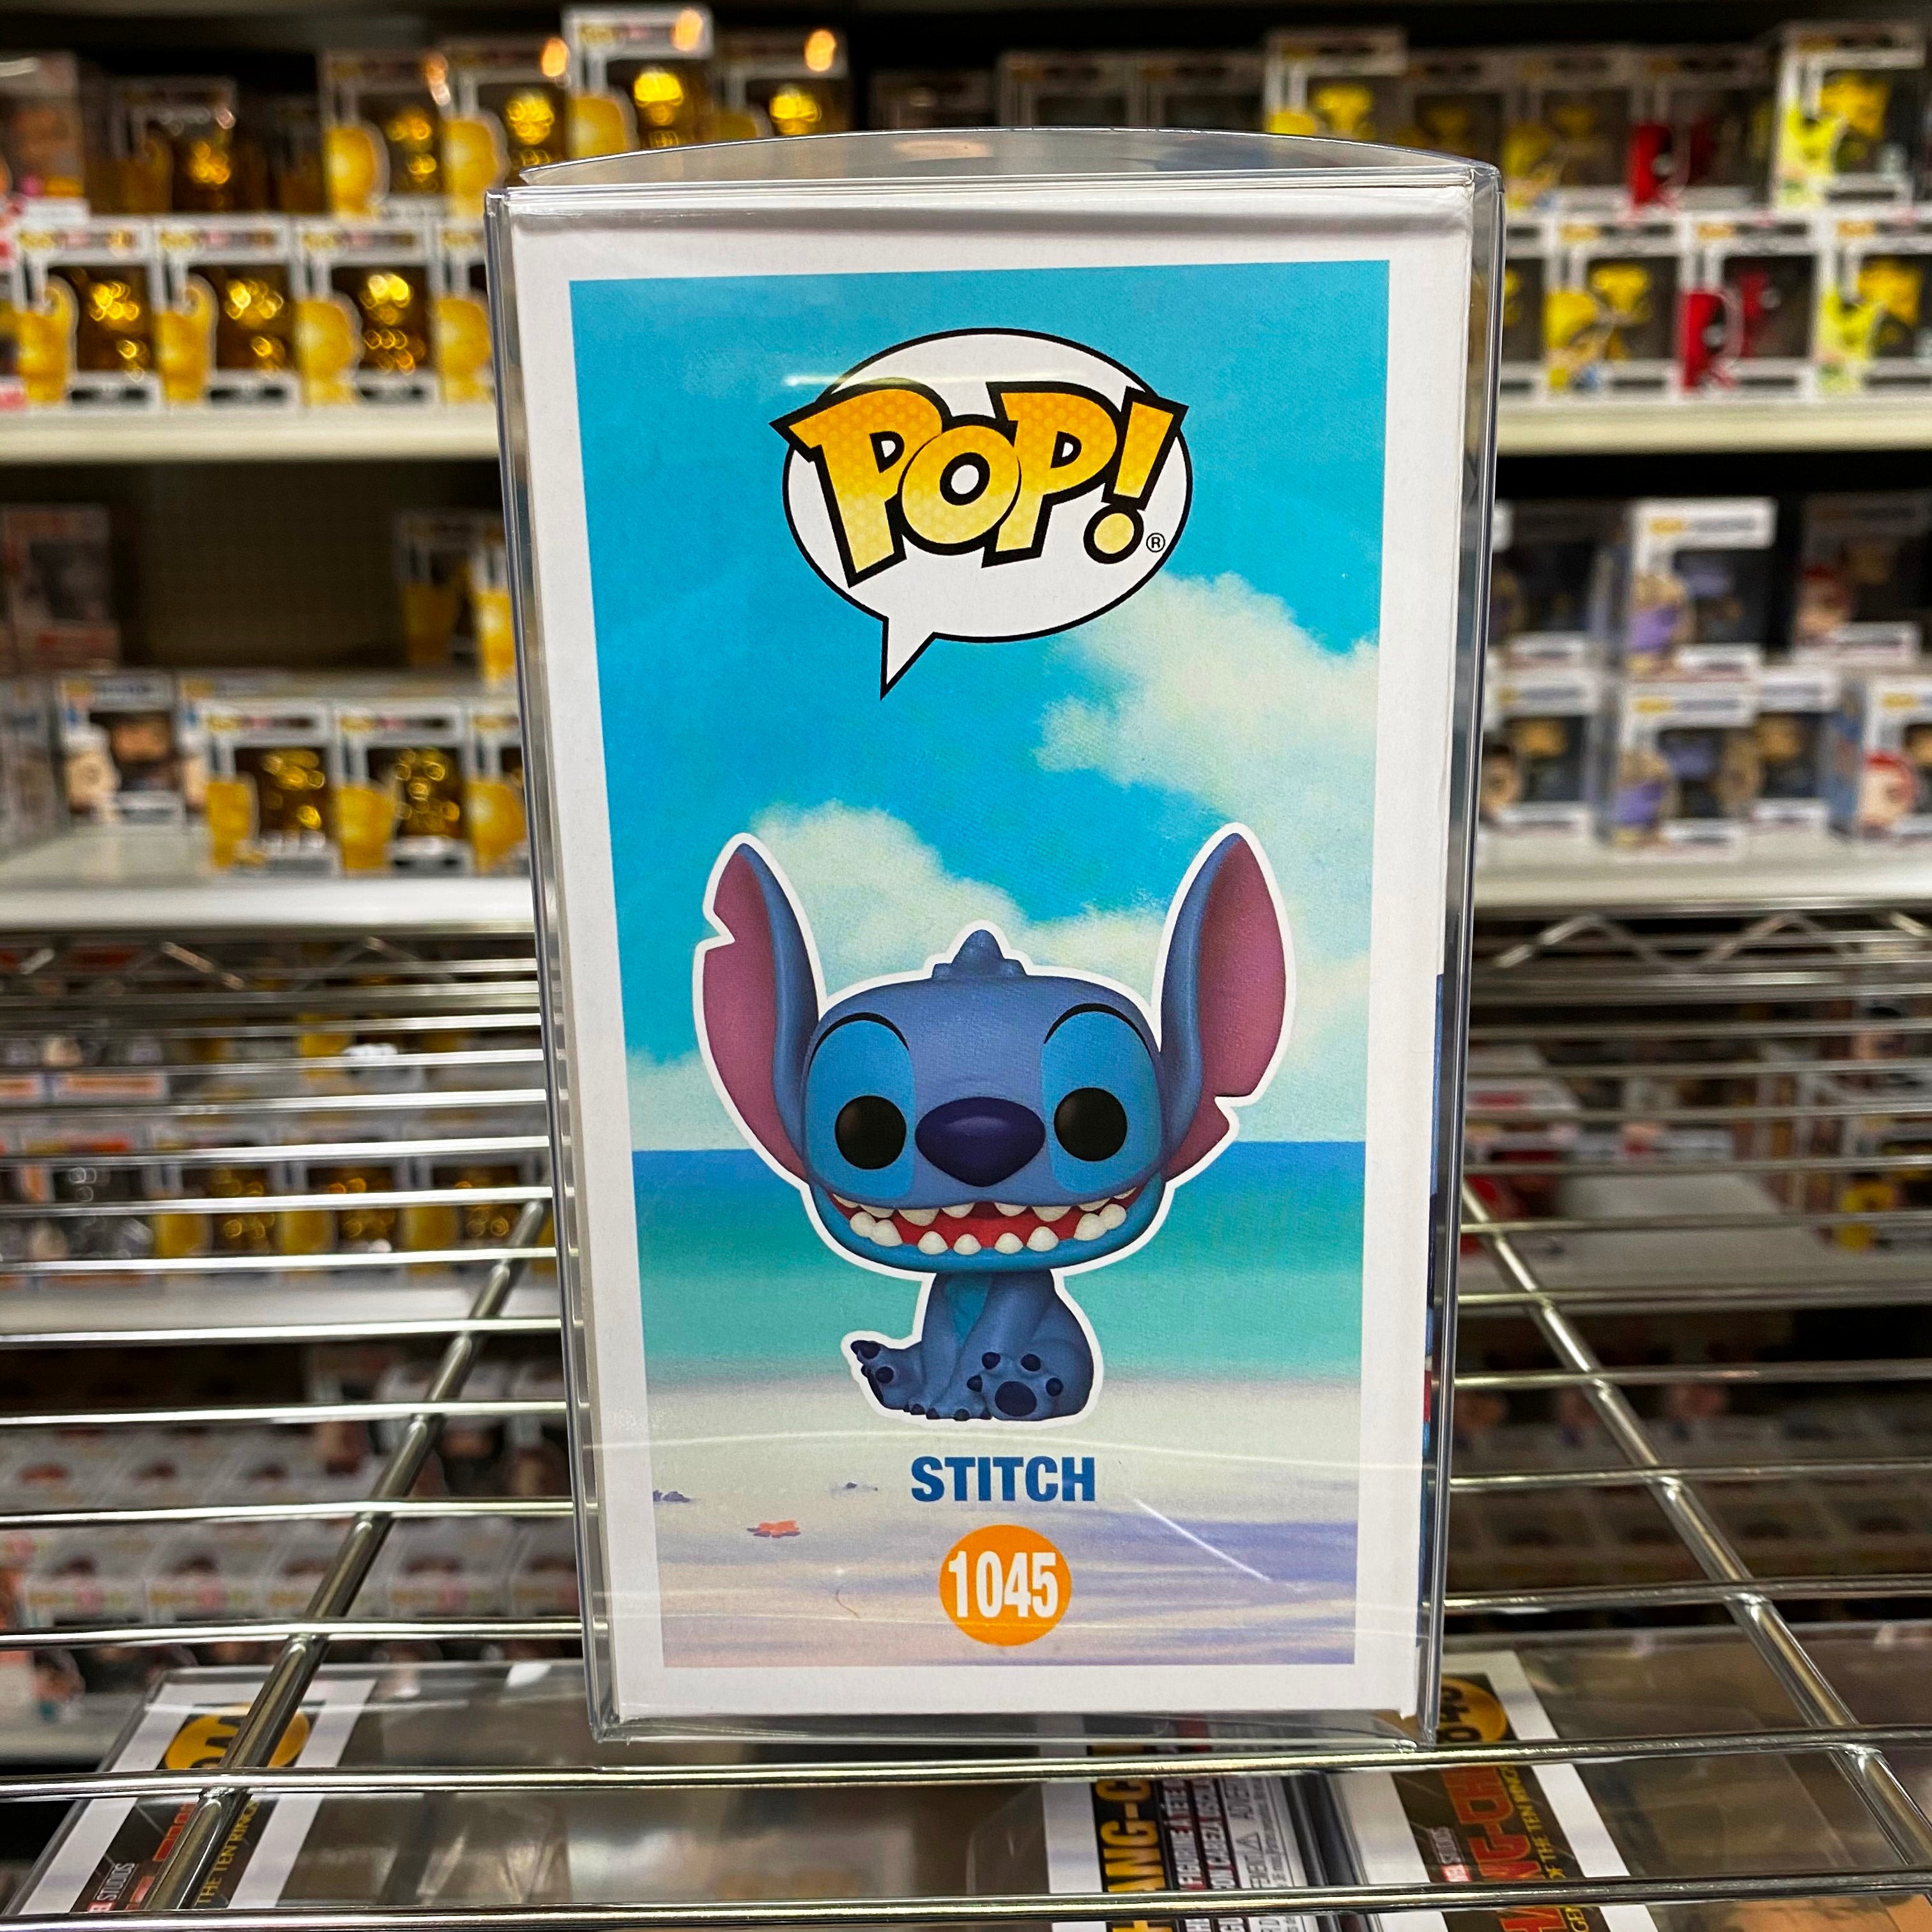 Funko Pop! Disney Stitch On Tricycle Funko Shop Exclusive Figure